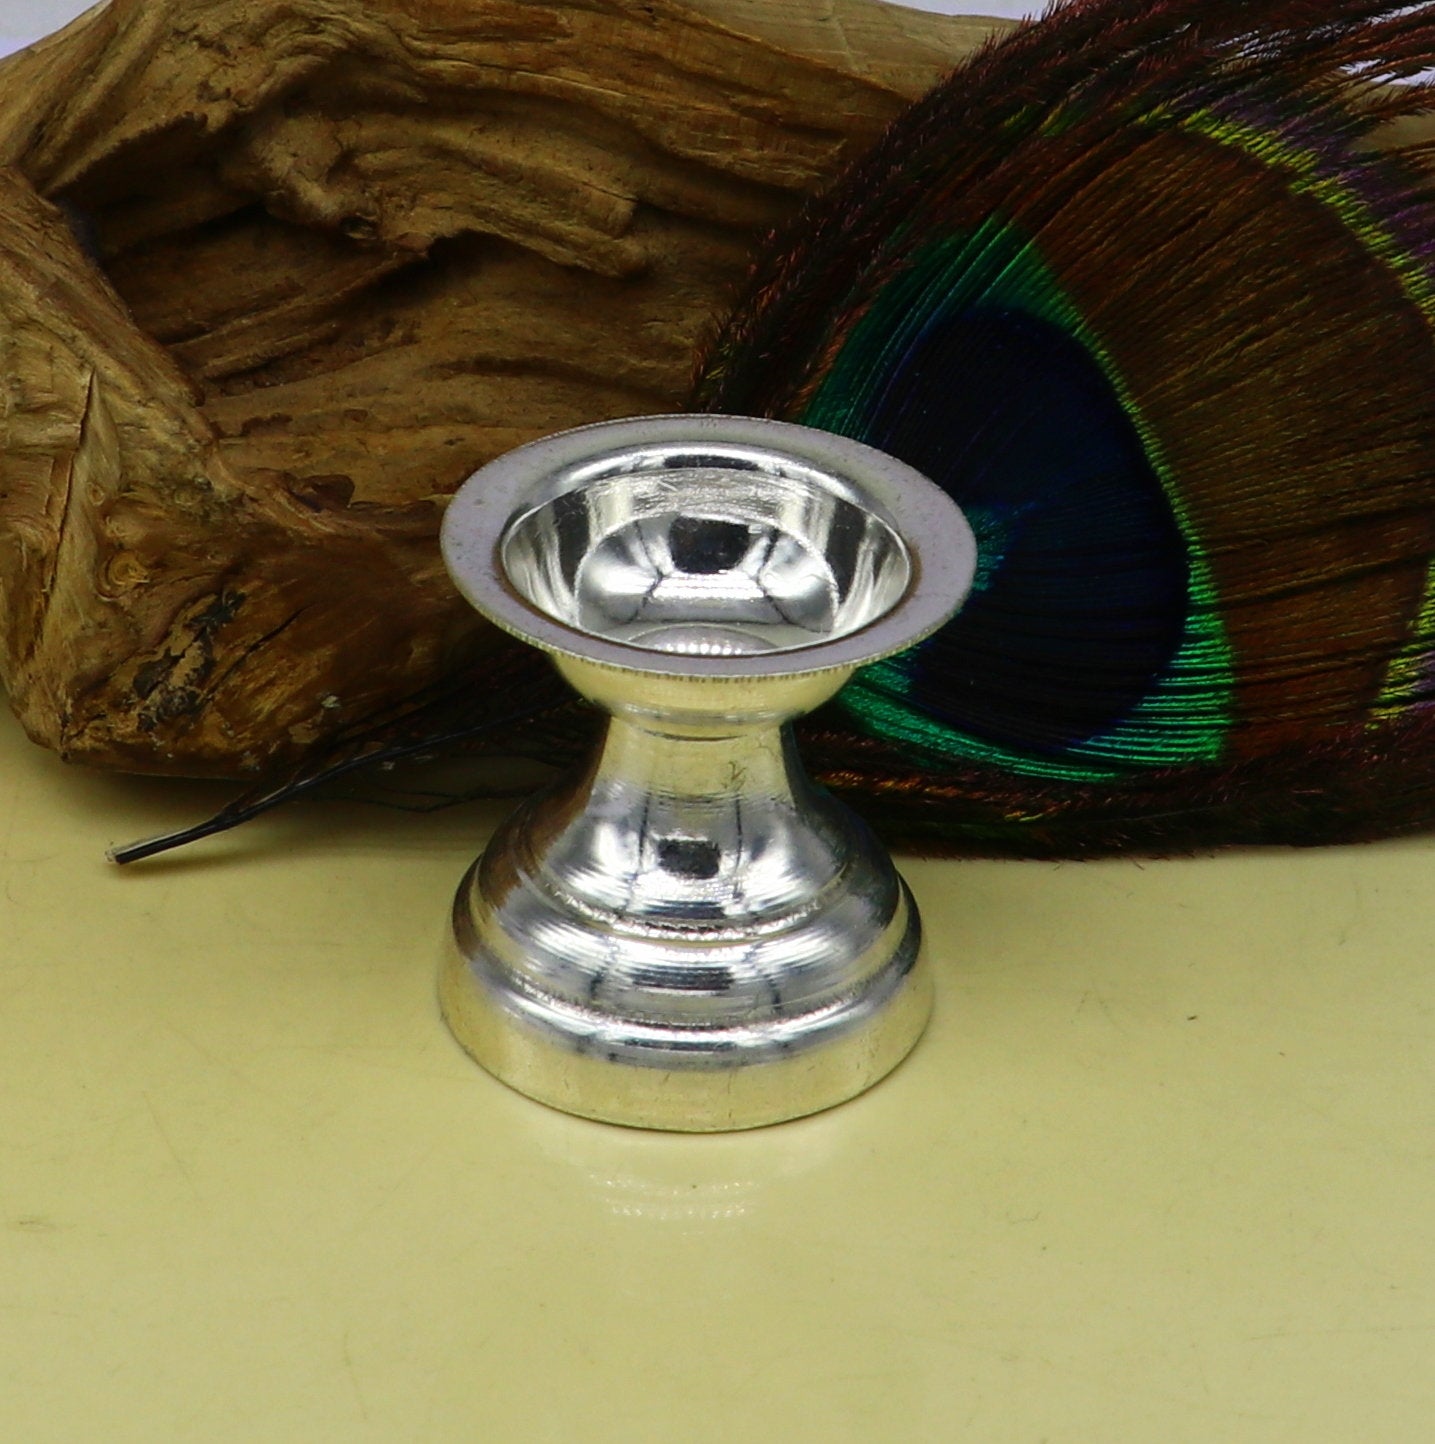 999 pure silver handmade elegant oil lamp, silver home temple utensils, silver diya, deepak, silver vessels, silver art decorative art su082 - TRIBAL ORNAMENTS